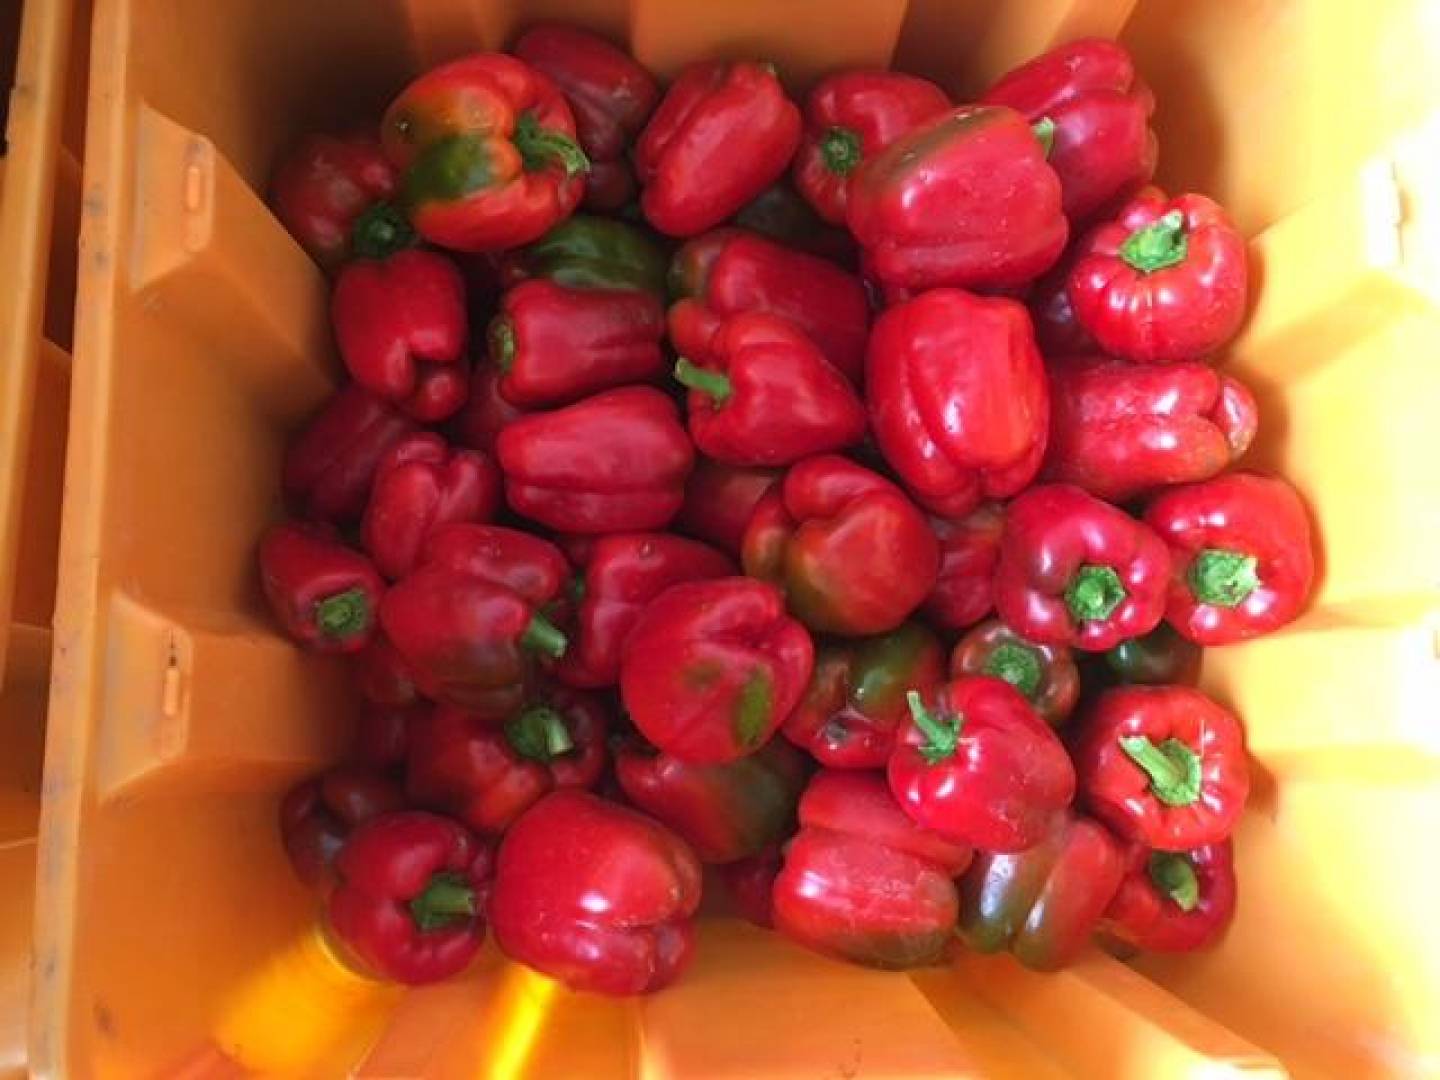 Pickled Hot Peppers (1 quart)